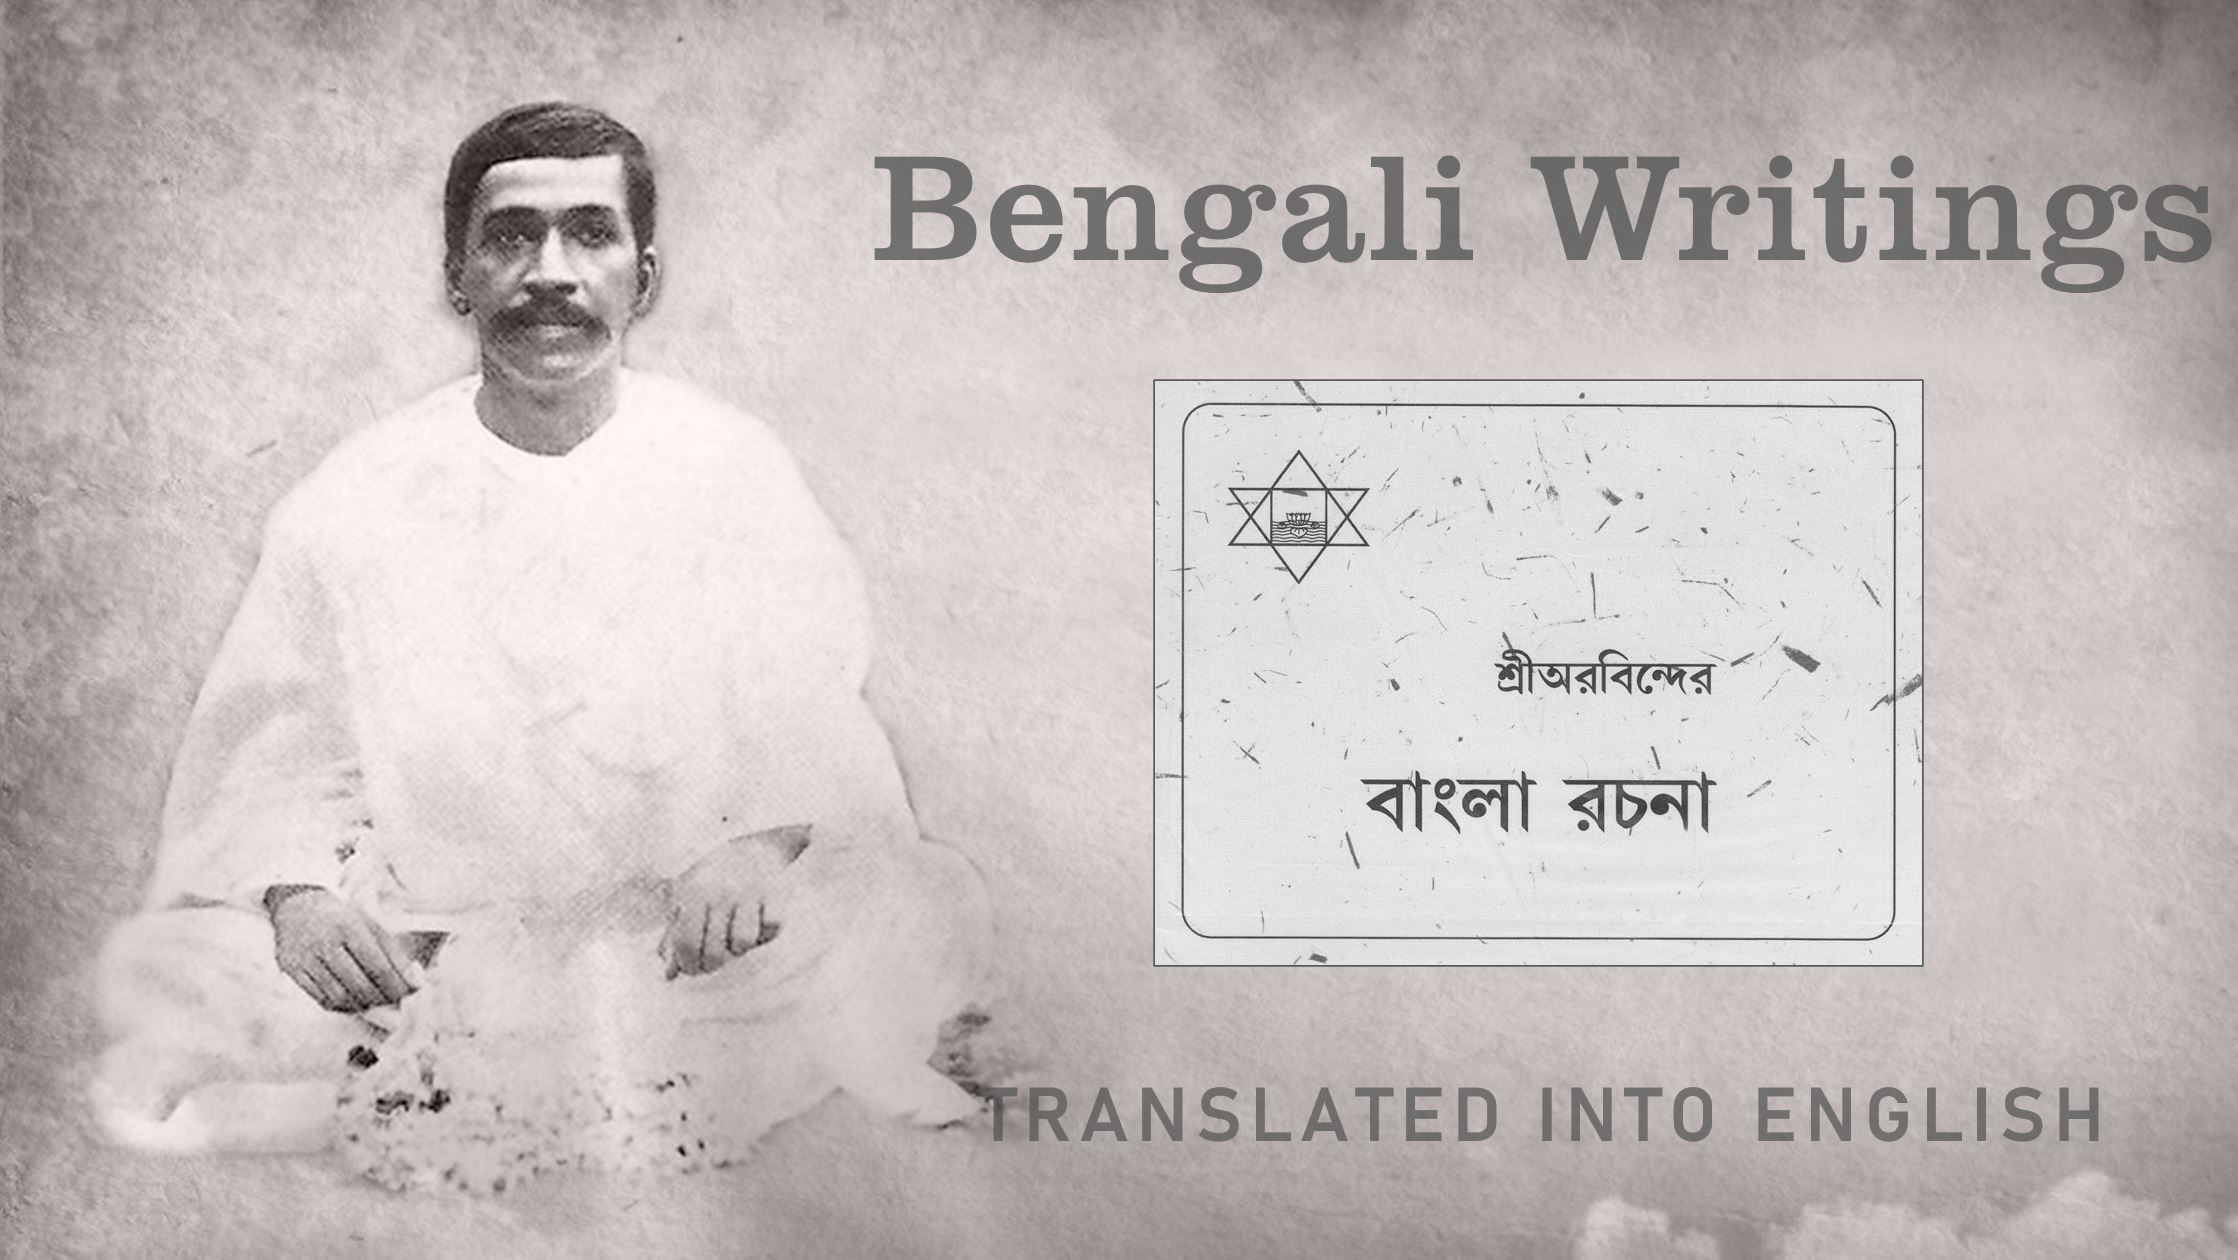 BENGALI WRITINGS